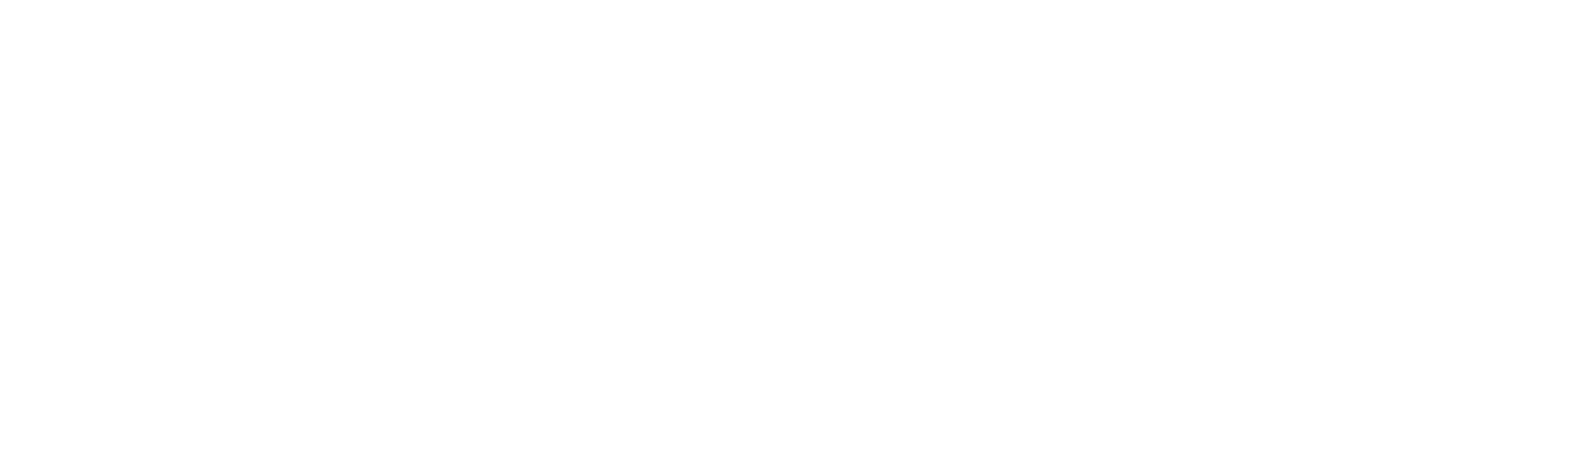 QBE Insurance
 logo large for dark backgrounds (transparent PNG)